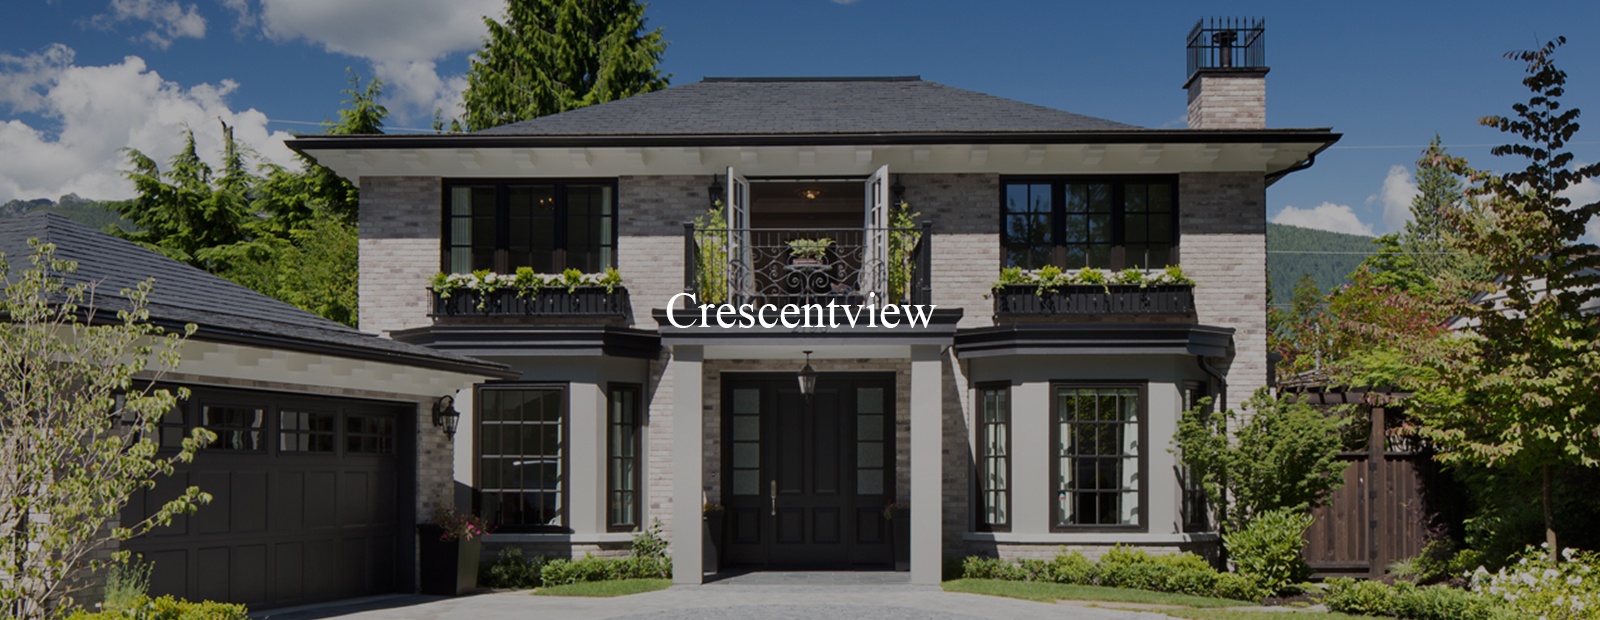 Crescentview - Interior Design Company Vancouver